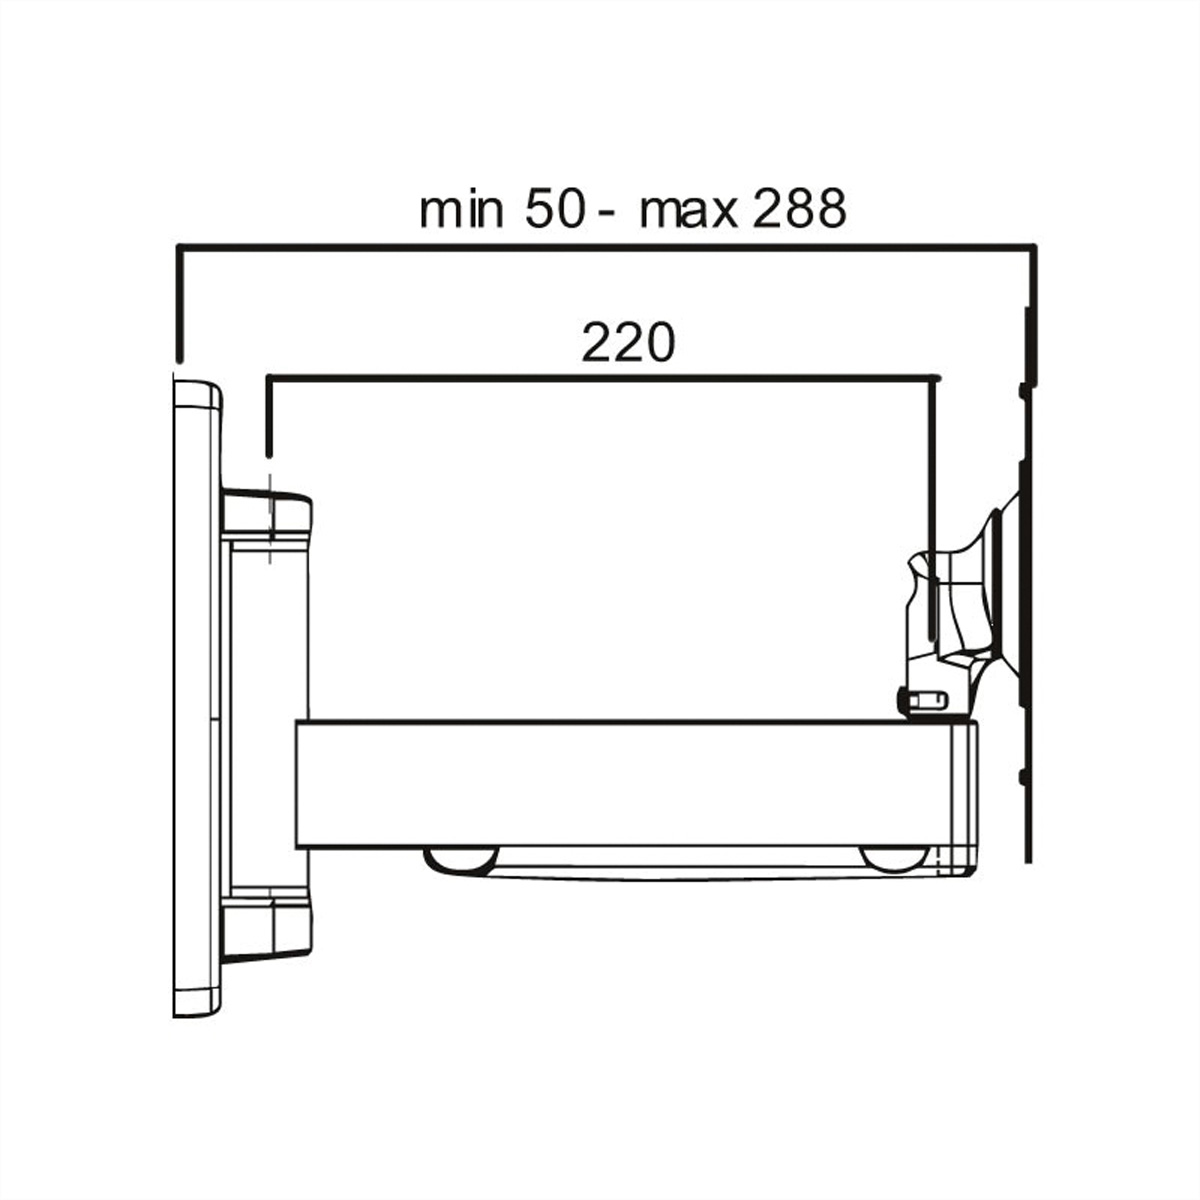 4 ROLINE Monitorarm, Drehpunkte Wandmontage Extralang, LCD/TV-Wandhalterung,